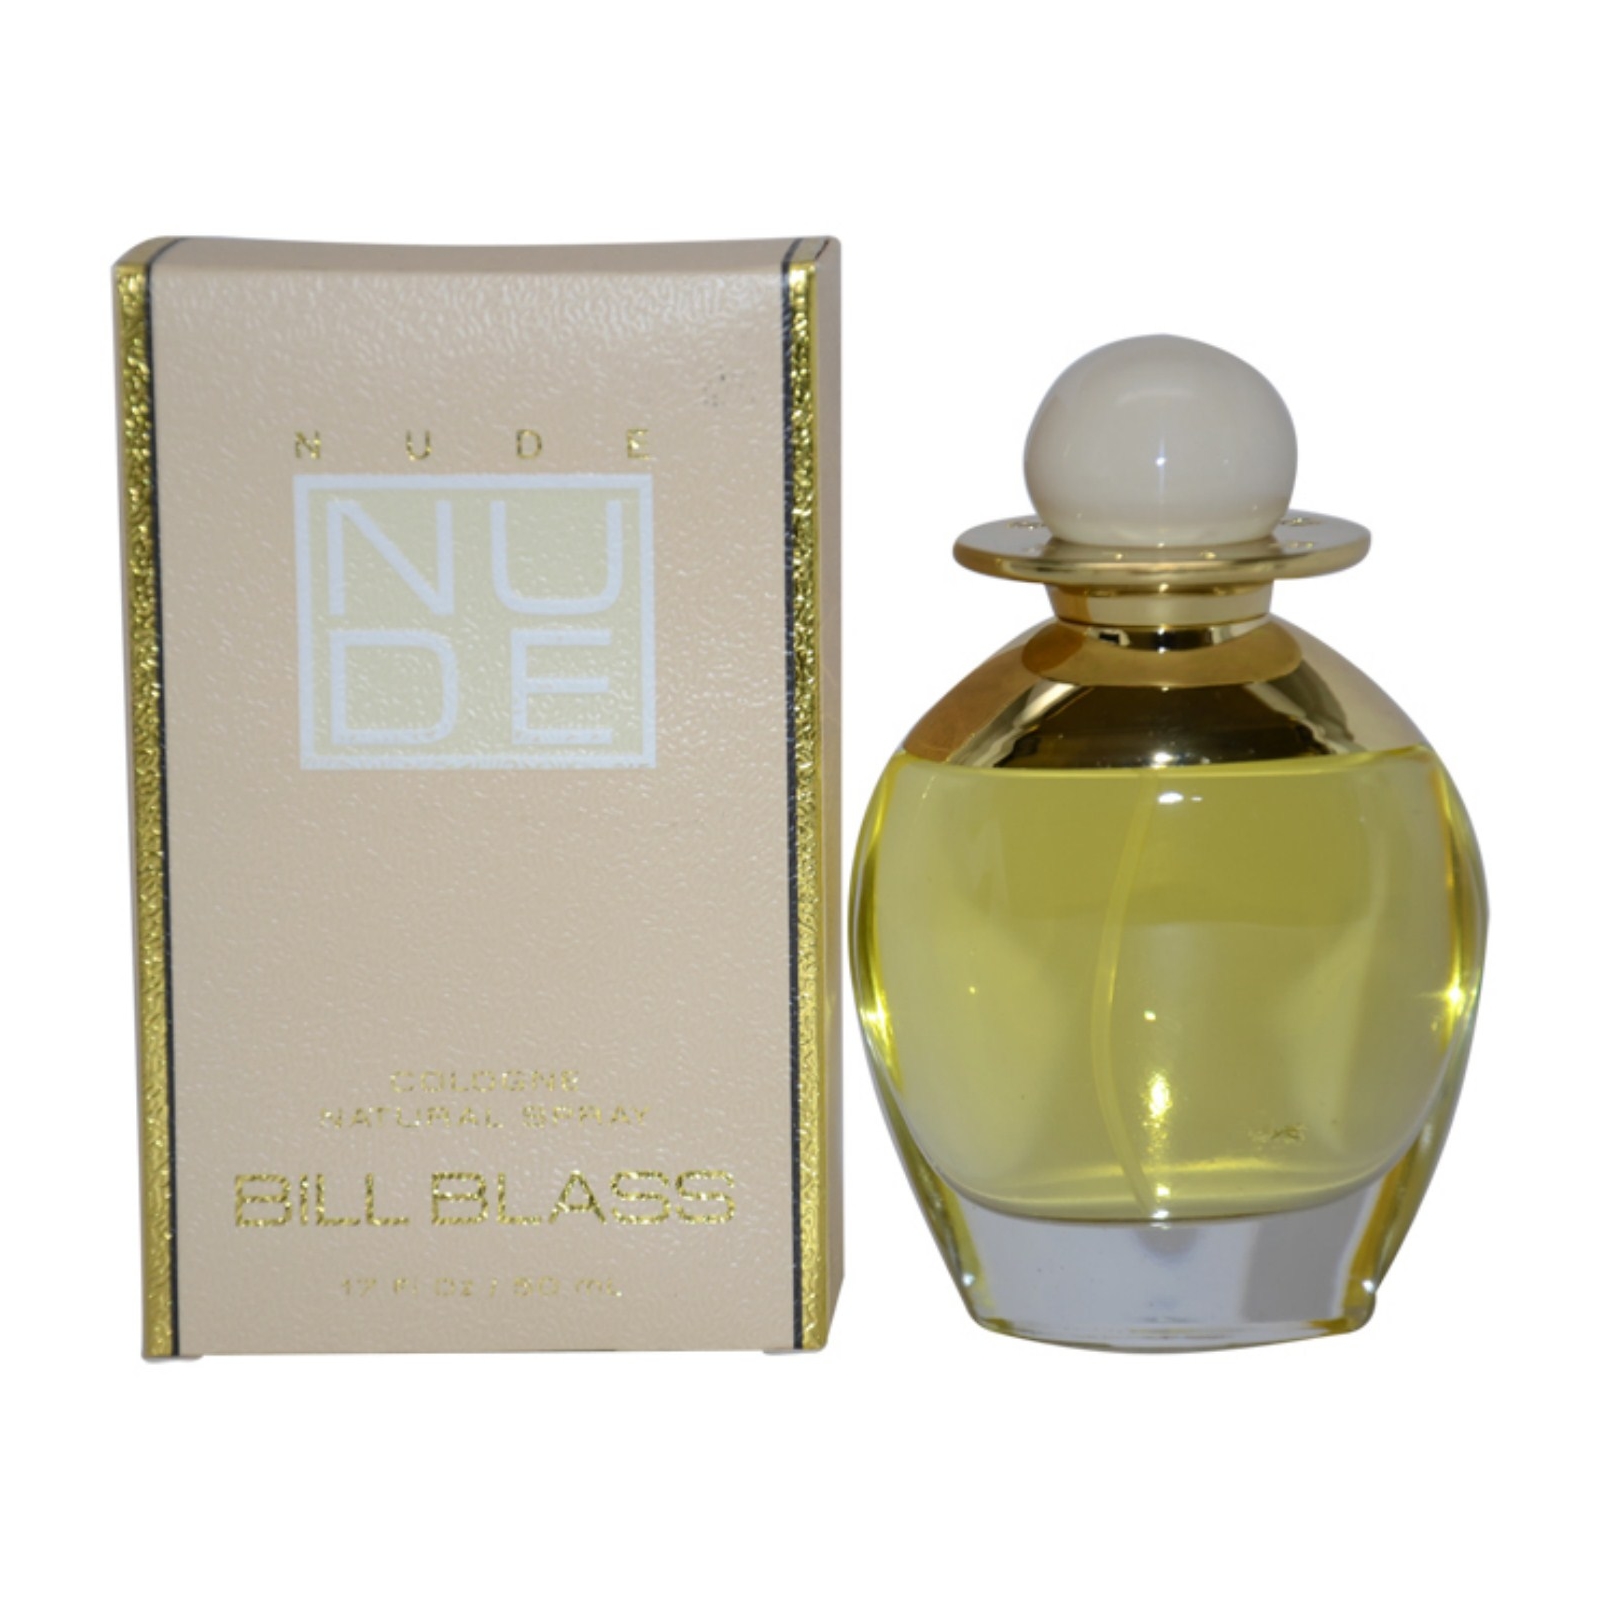 Nude by Bill Blass Perfume for Women 3.4 oz EDC Spray New 